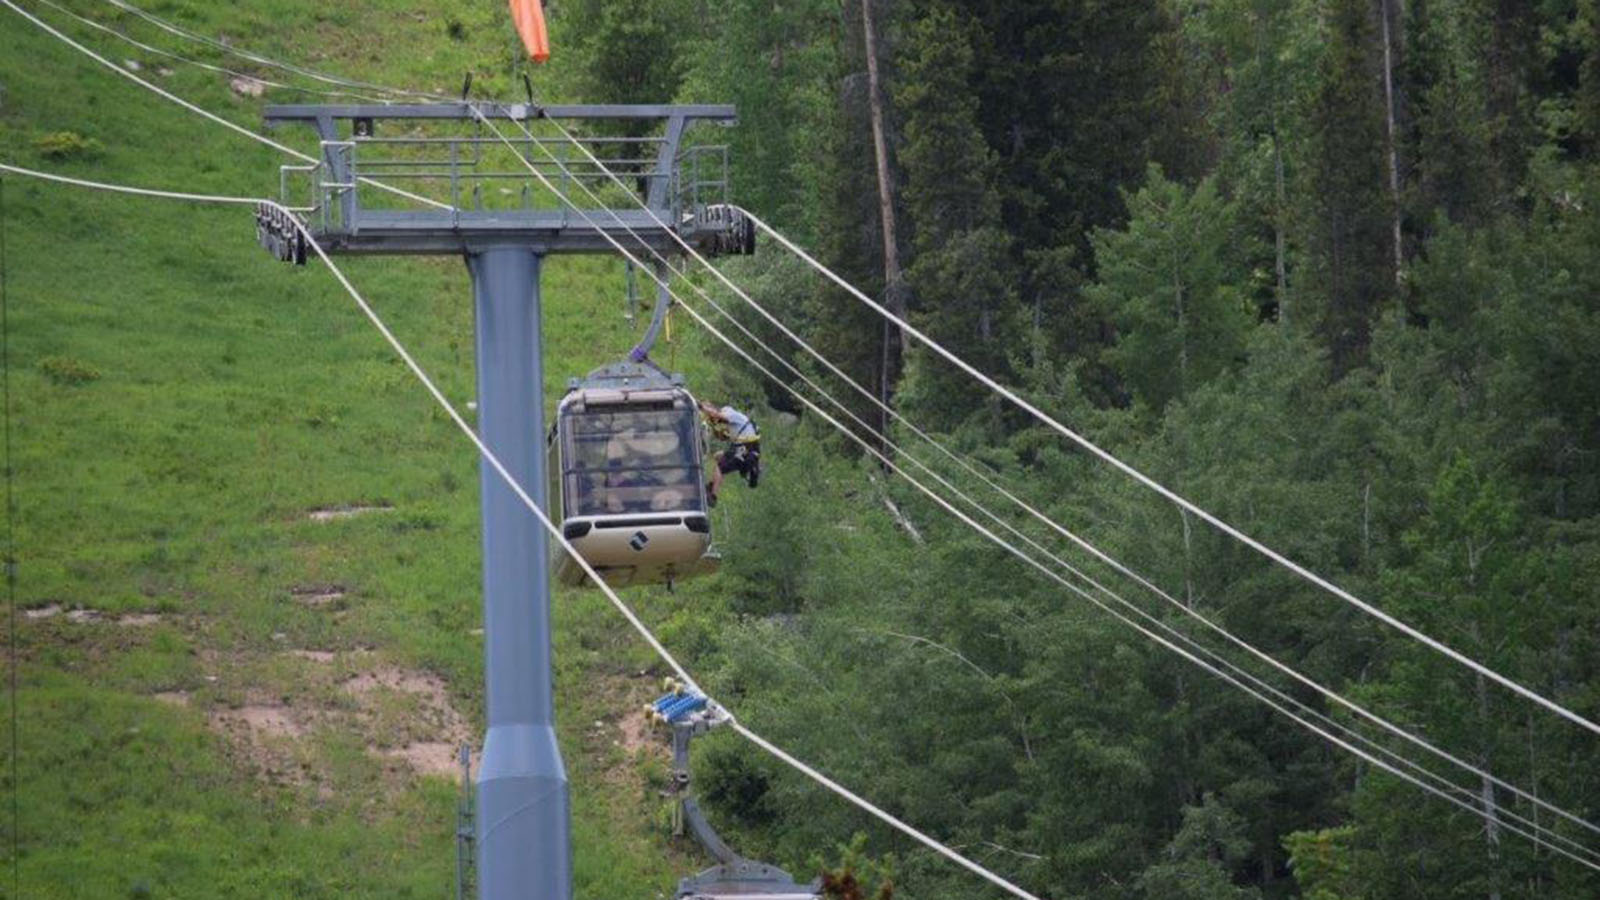 Eagle Bahn gondola vail resorts